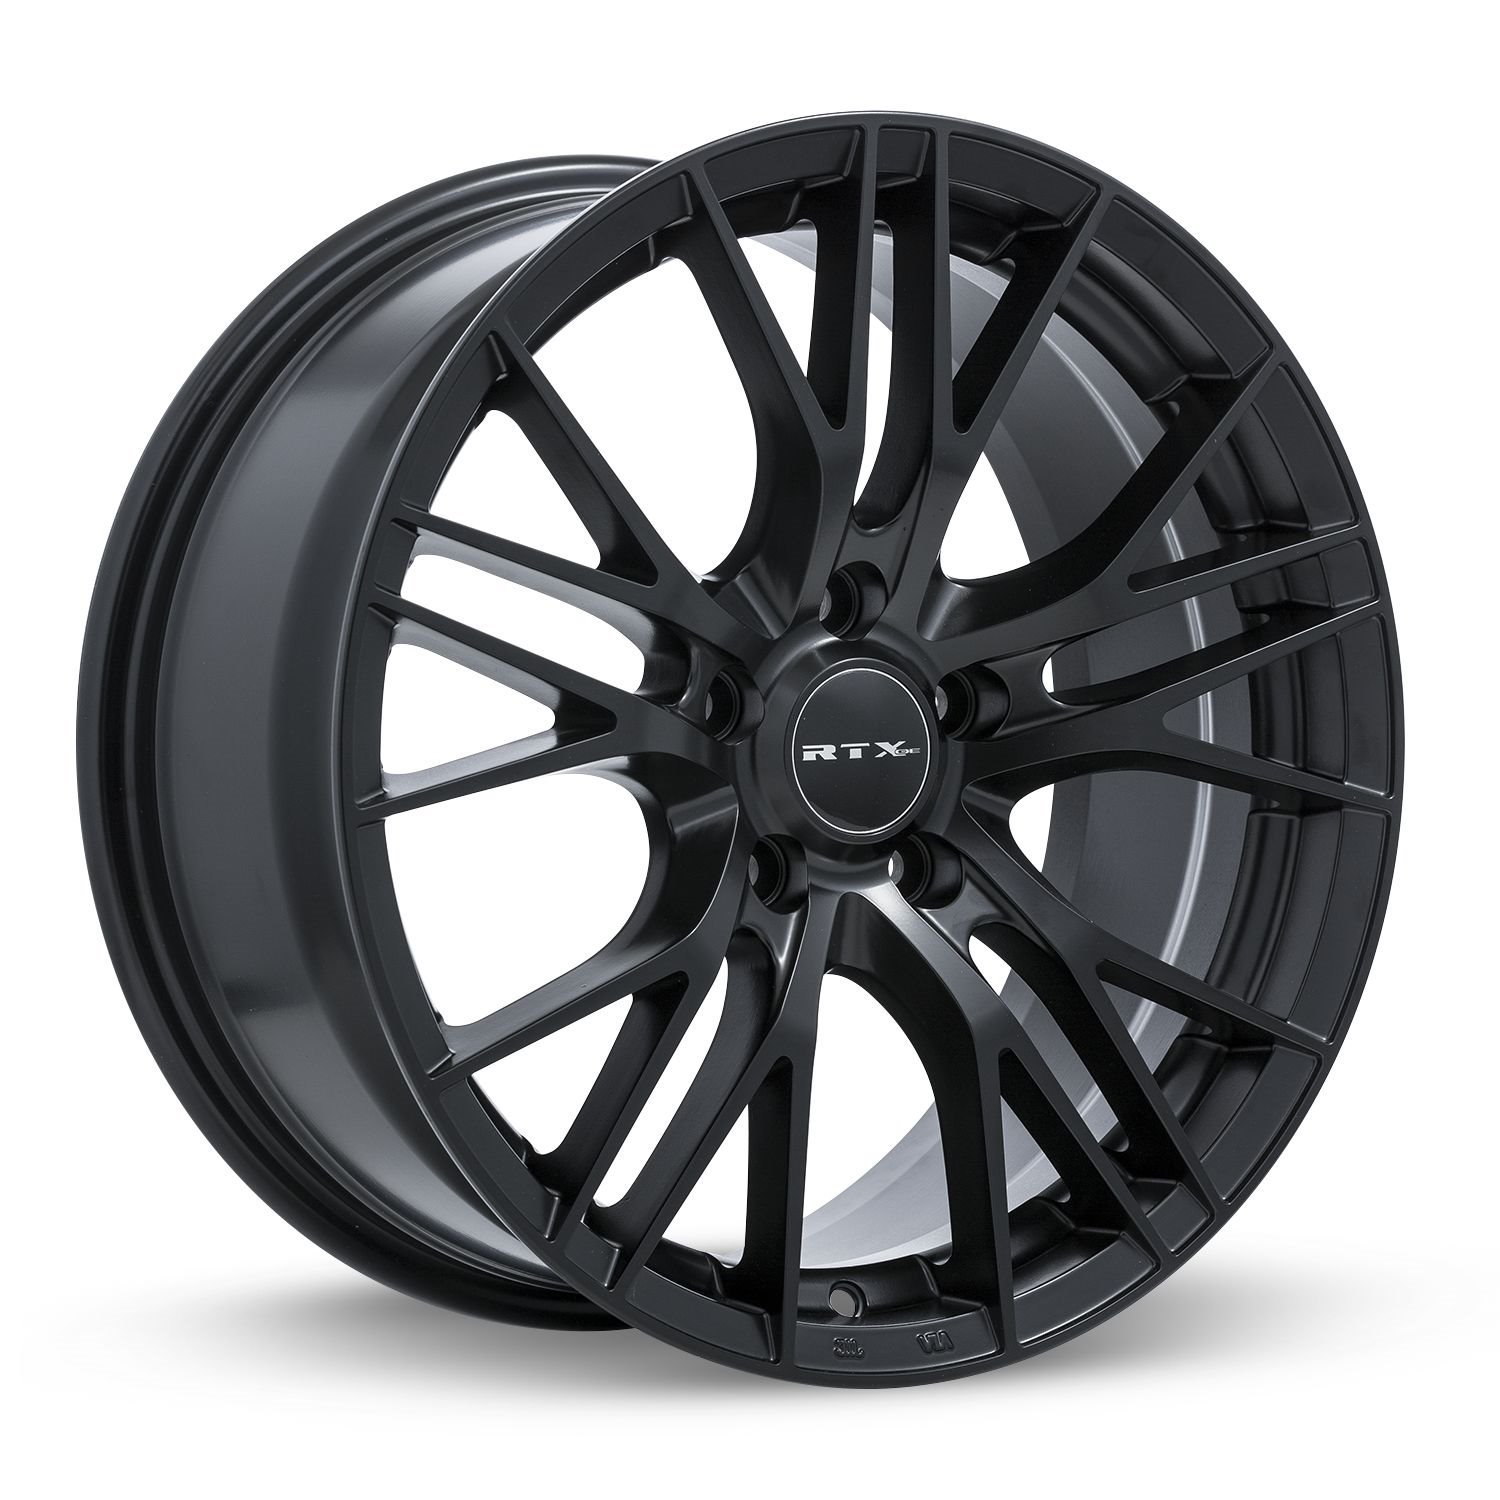 082299 RTX-Series Vertex Wheel [Size: 16" x 7"] Satin Black Finish